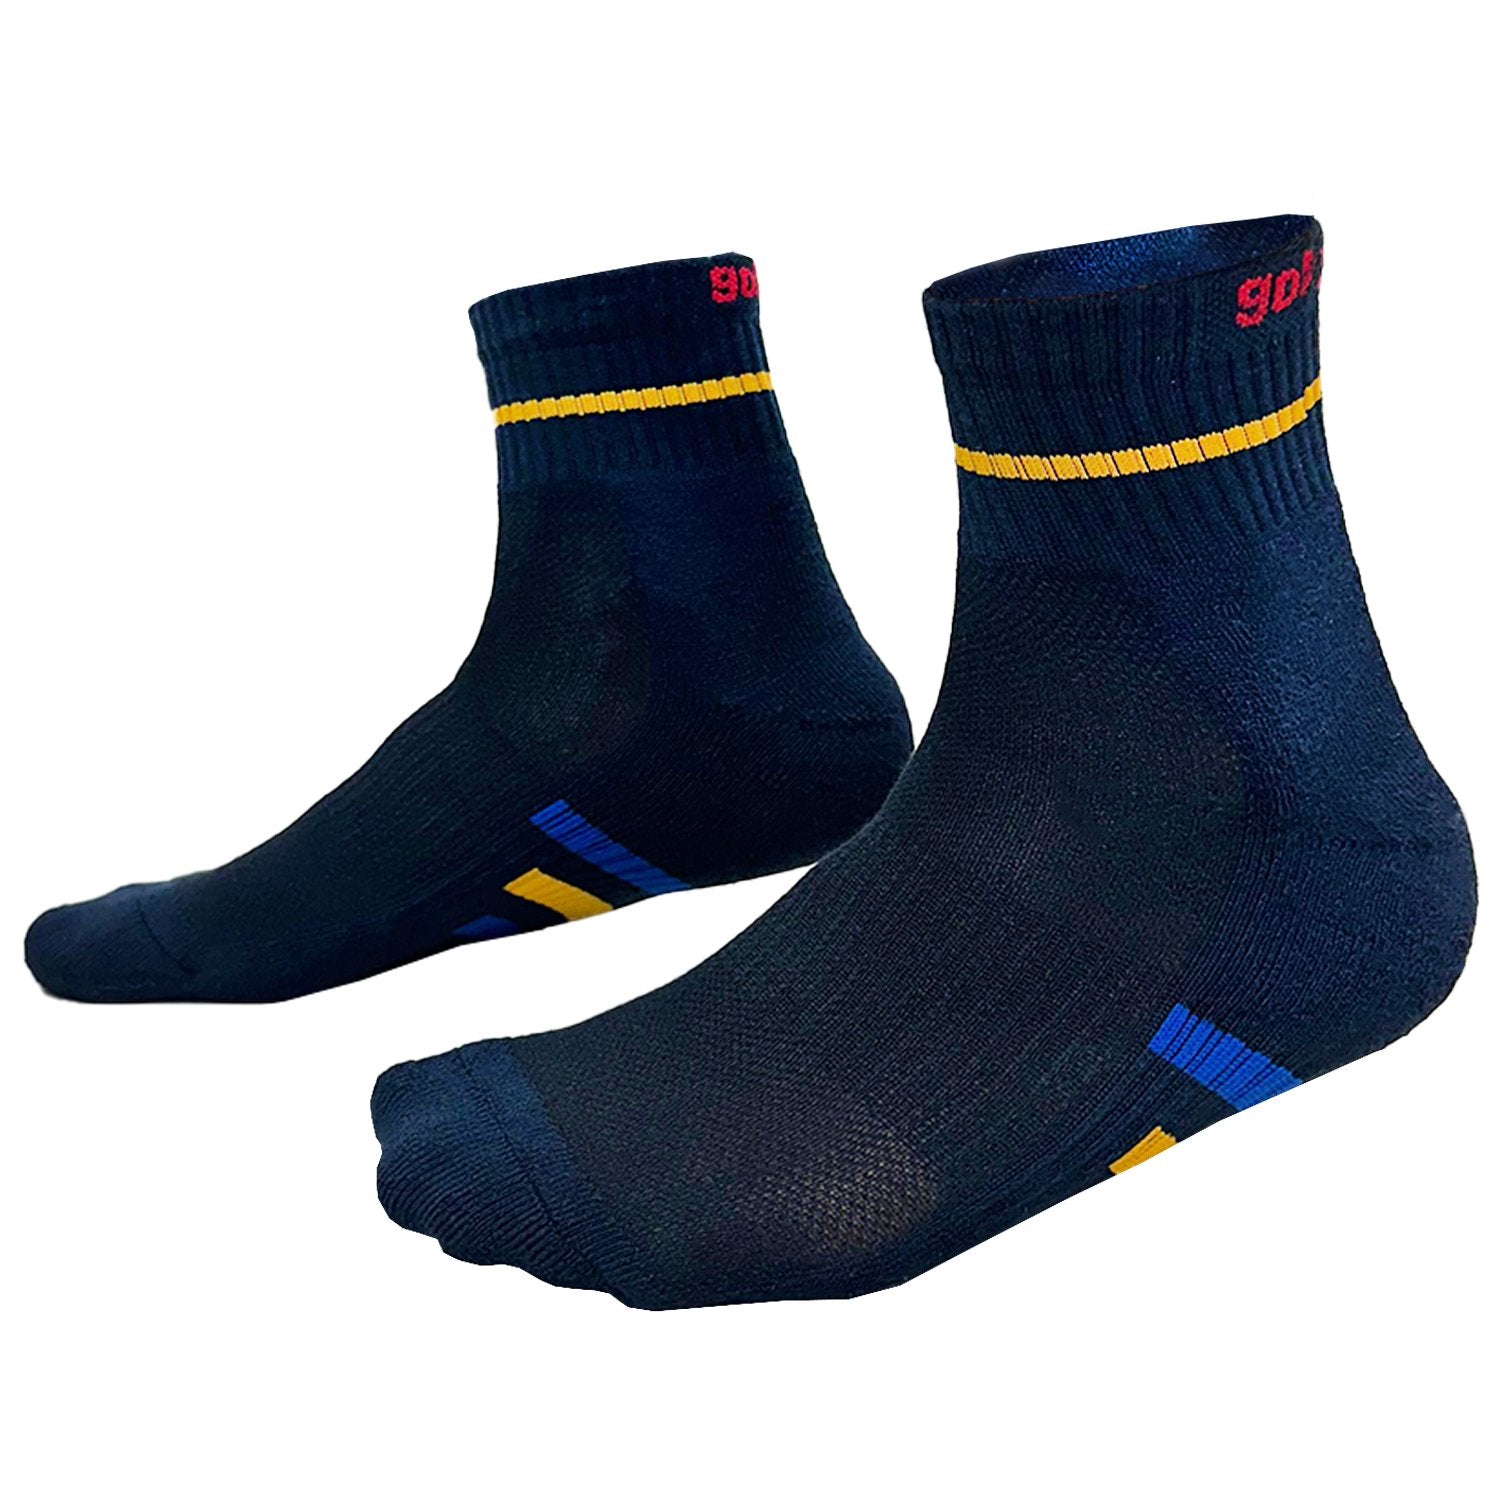 Buy Gokyo Comrade Running Socks UK 4-7 Blue UK 4-7 | Socks at Gokyo Outdoor Clothing & Gear